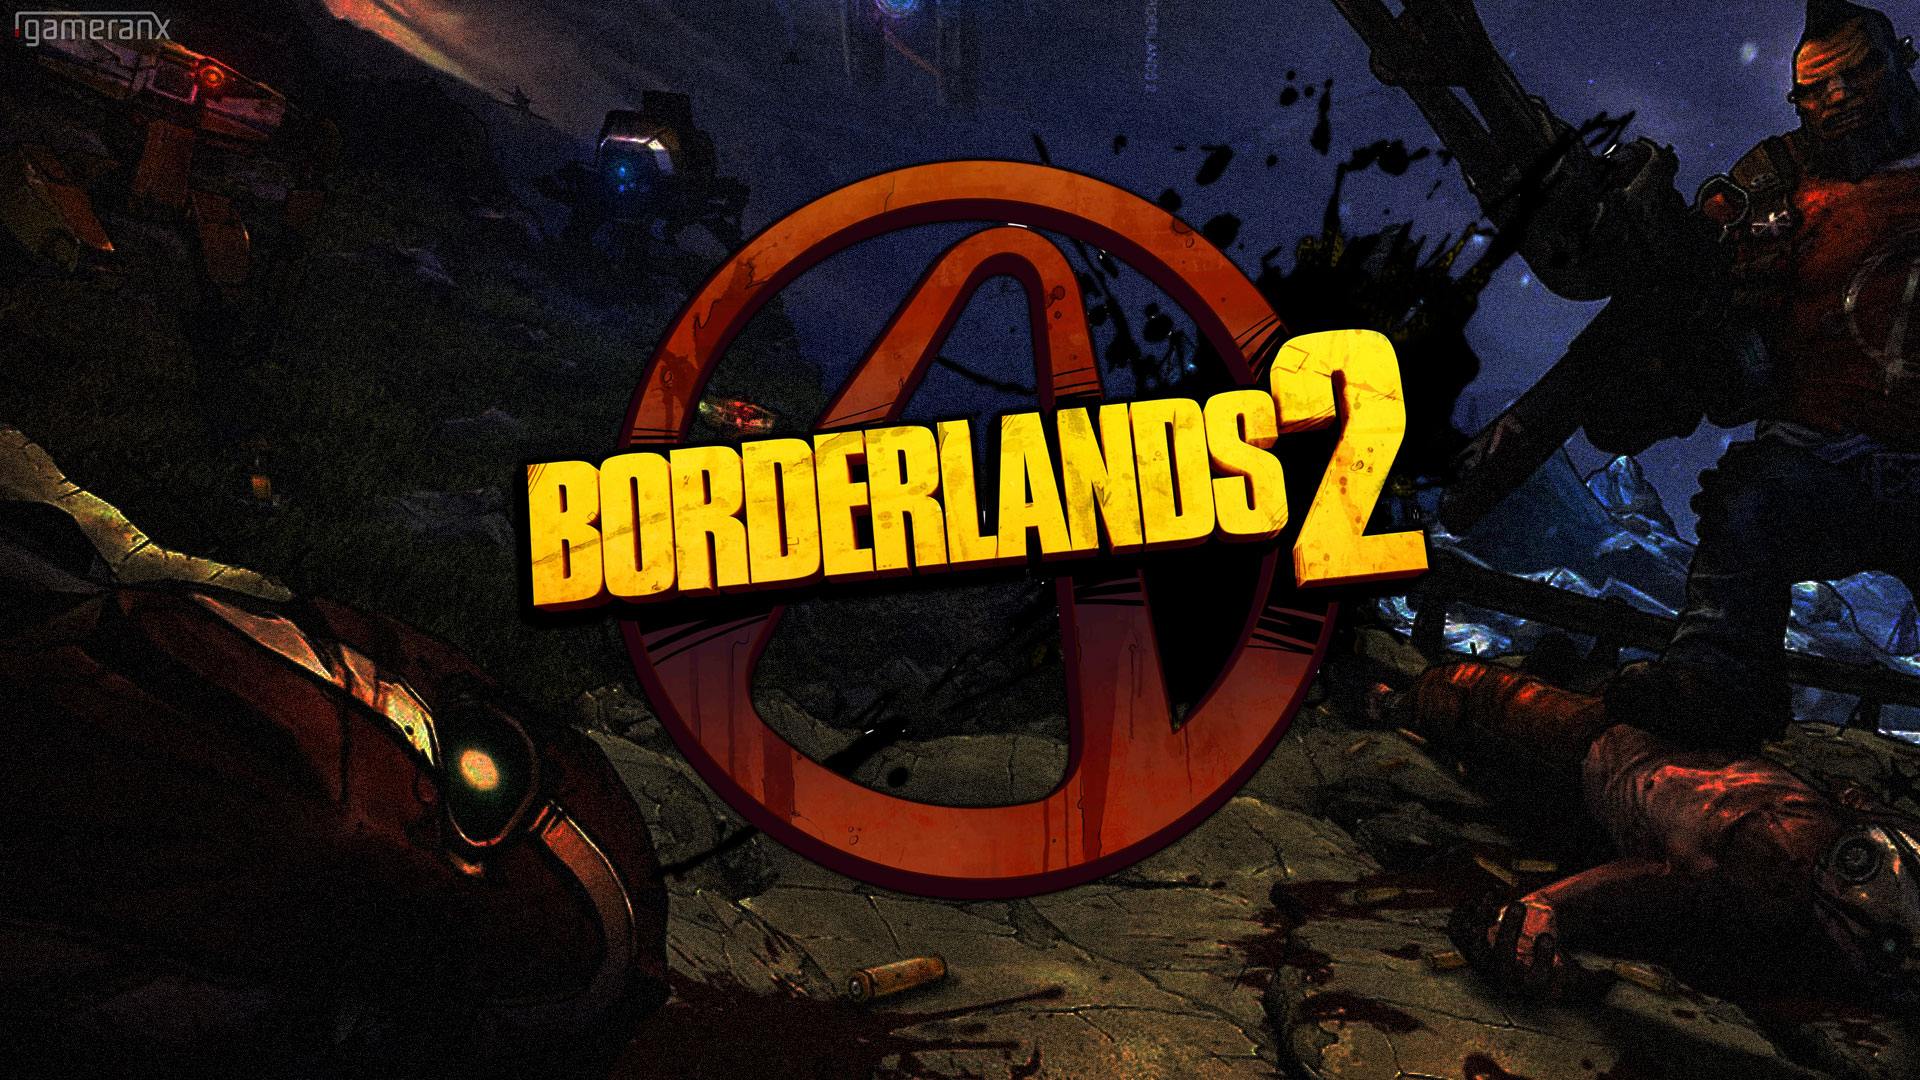 Borderlands 2 Wallpapers in HD Game Blog